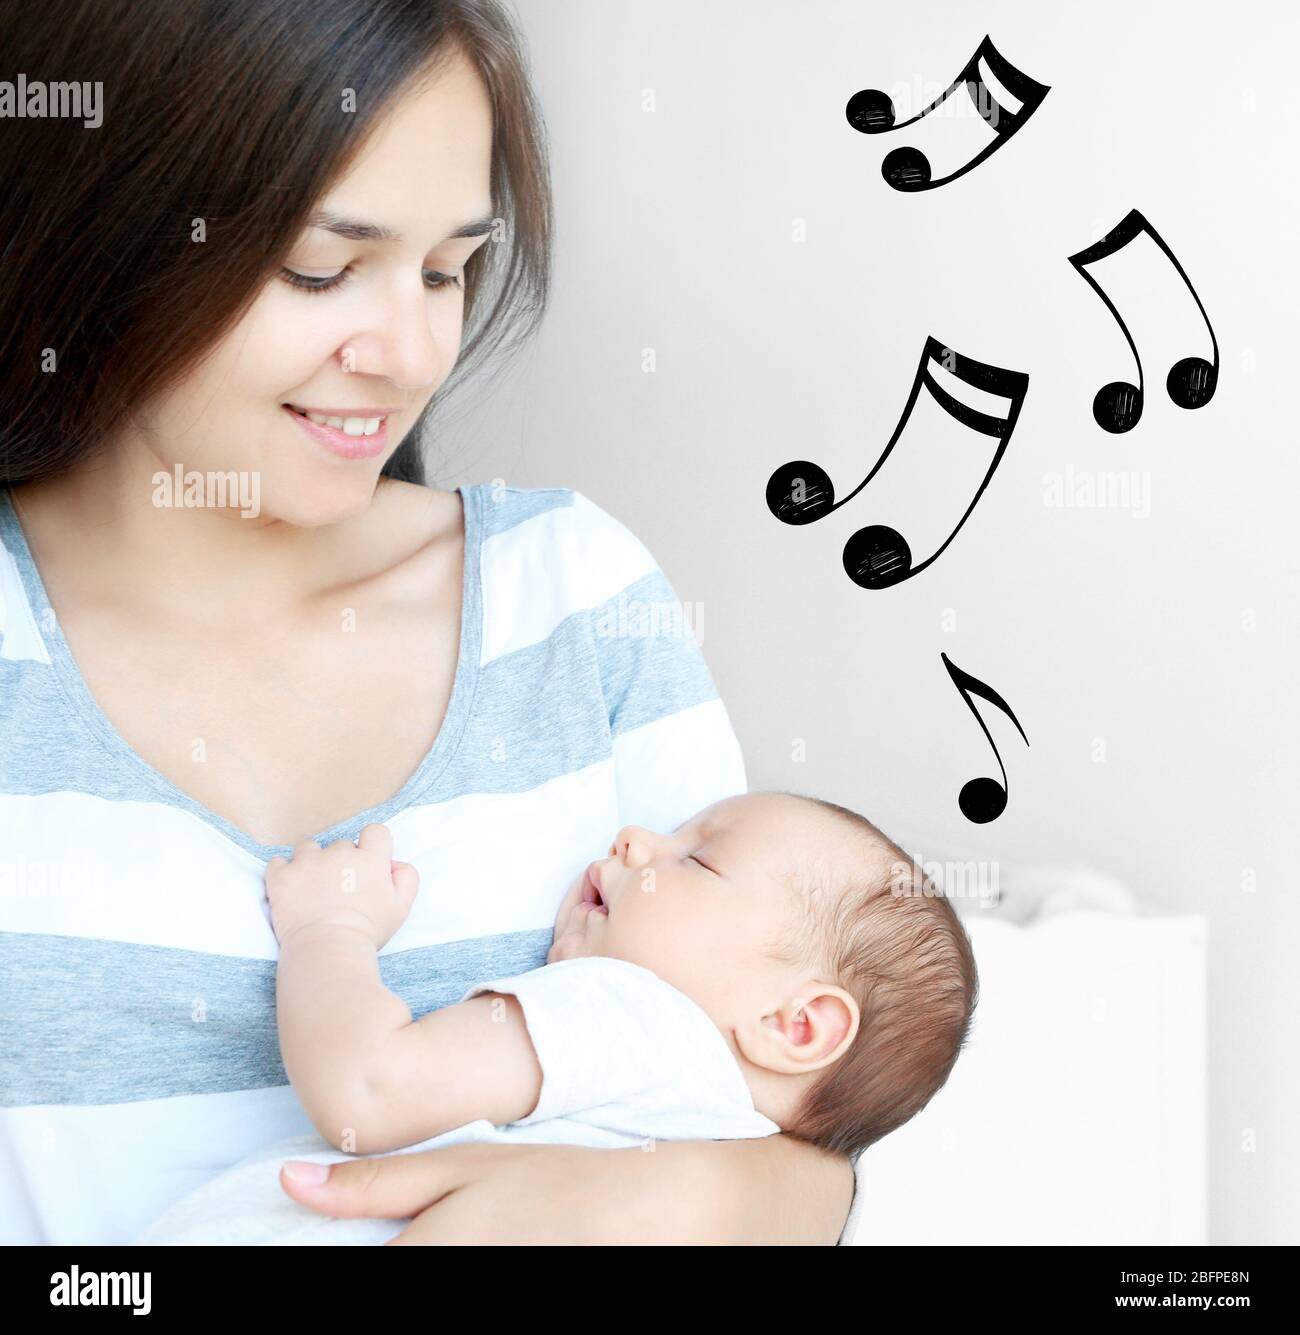 Музыка для новорожденного 1 месяц. Мелодия для младенцев. Mother Sings. A Mook a Baby Home.